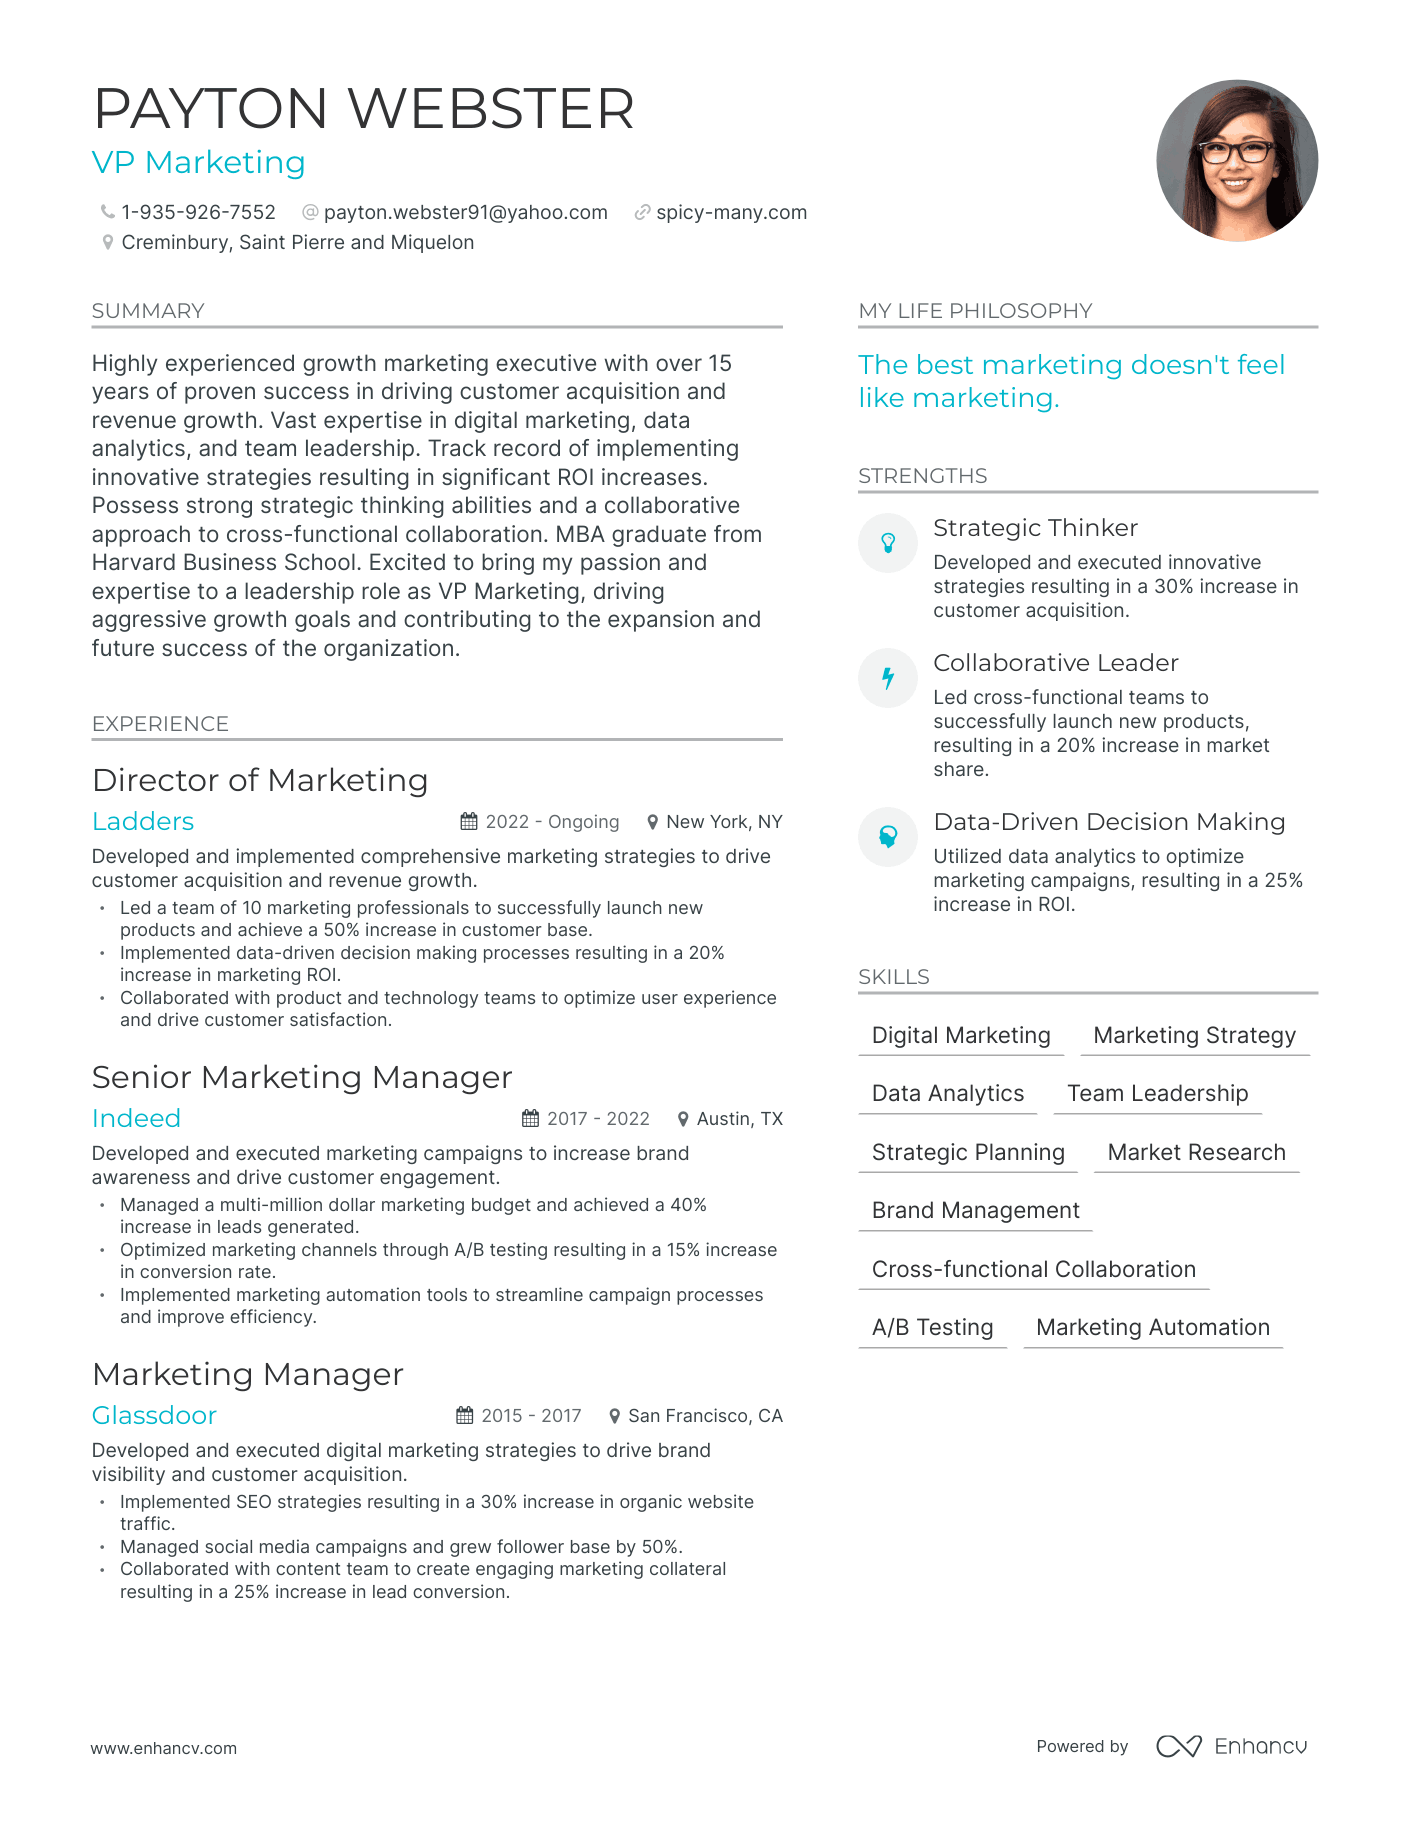 VP Marketing resume example